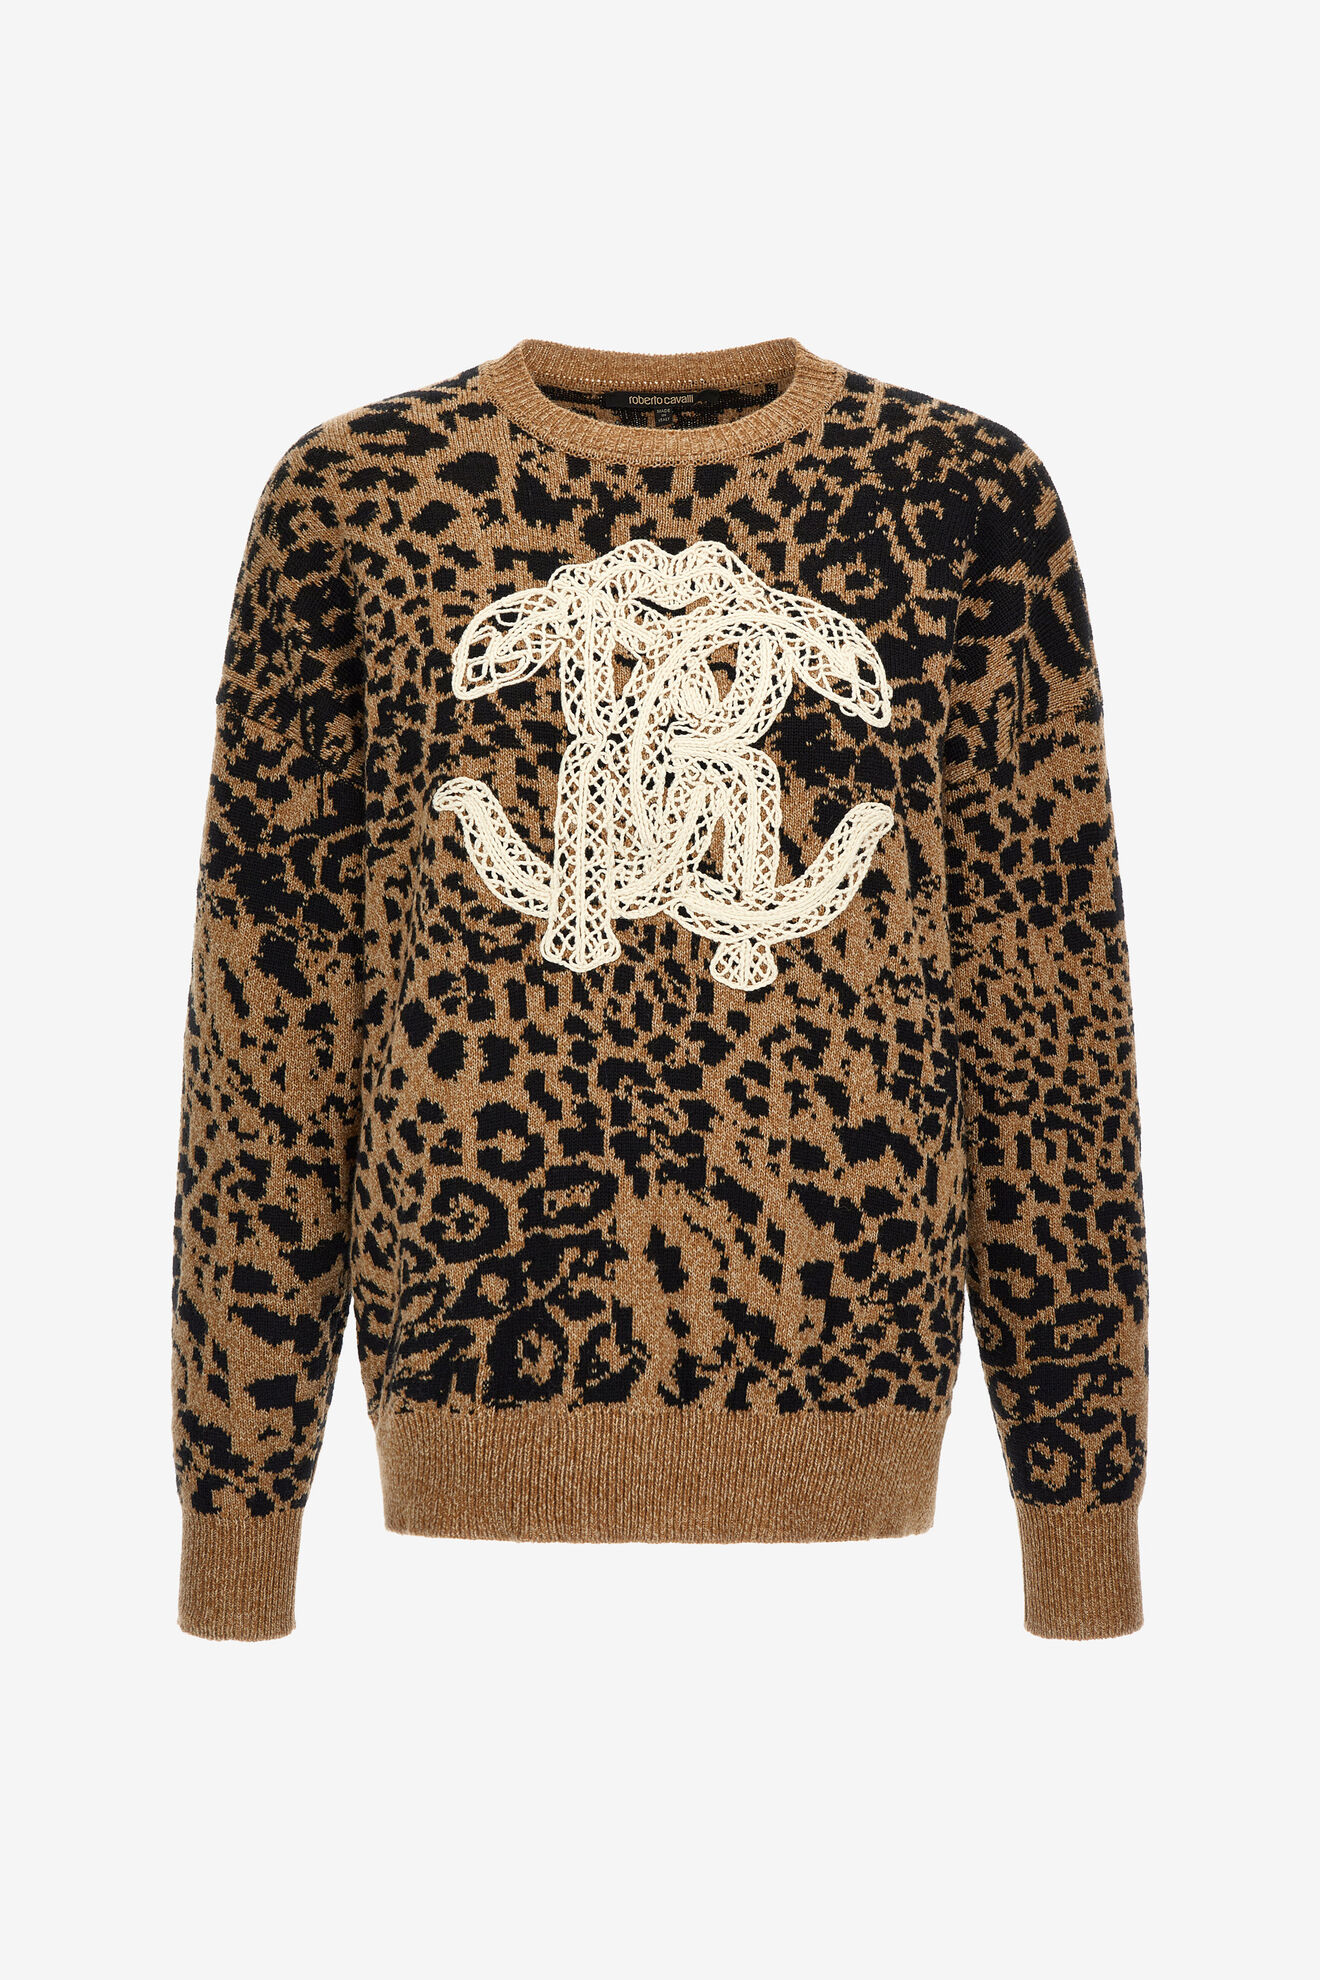 Roberto Cavalli Ladies Black Lucky Leopard Print Sweatshirt, Size Large  IQT668-CF048-05051 8051121966463 - Apparel - Jomashop